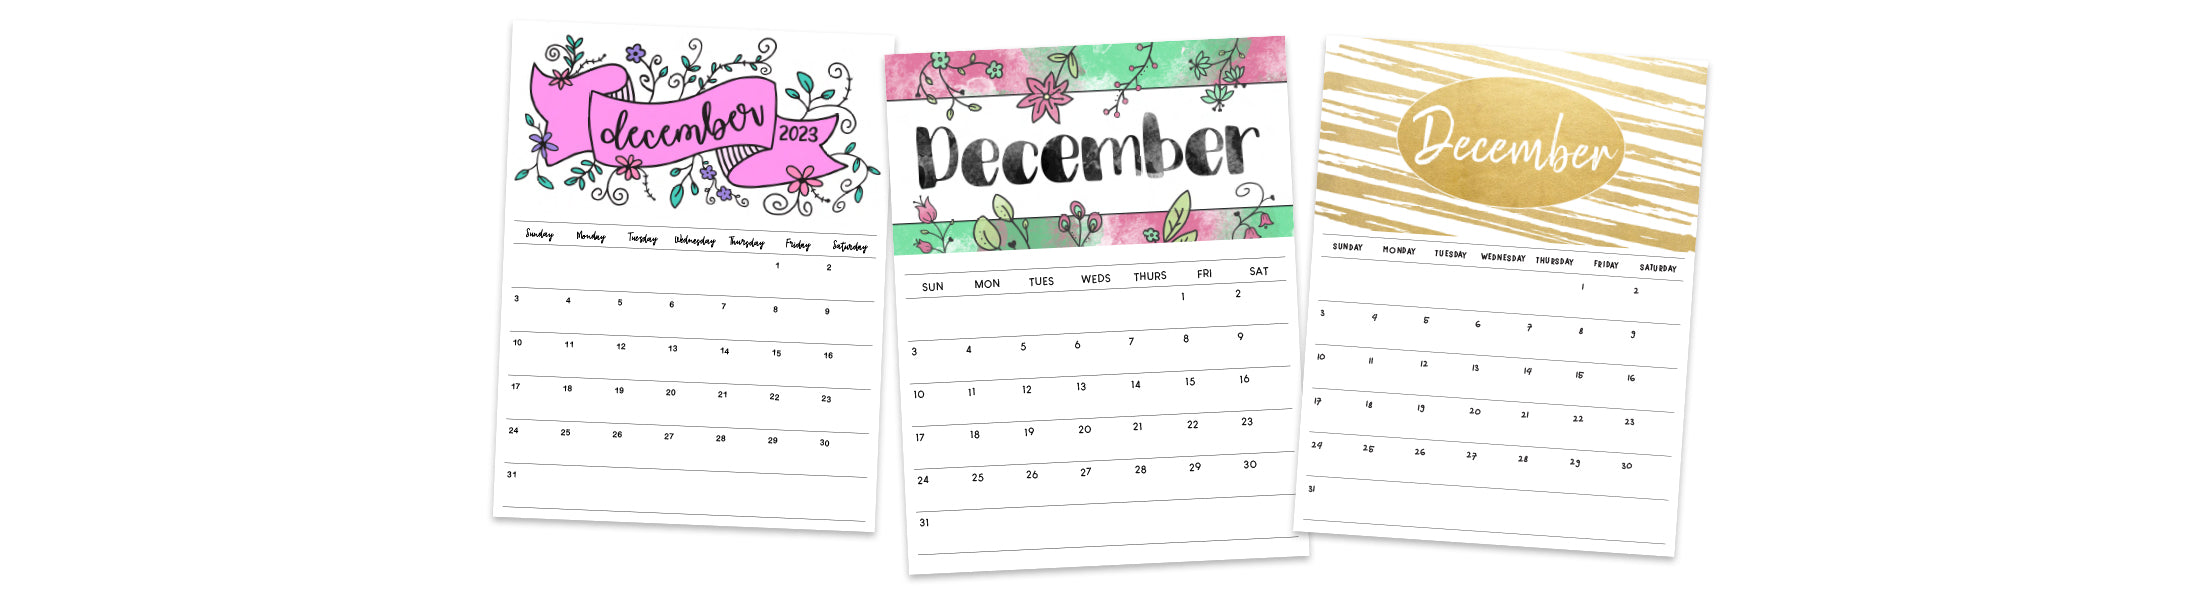 Printable December Calendars